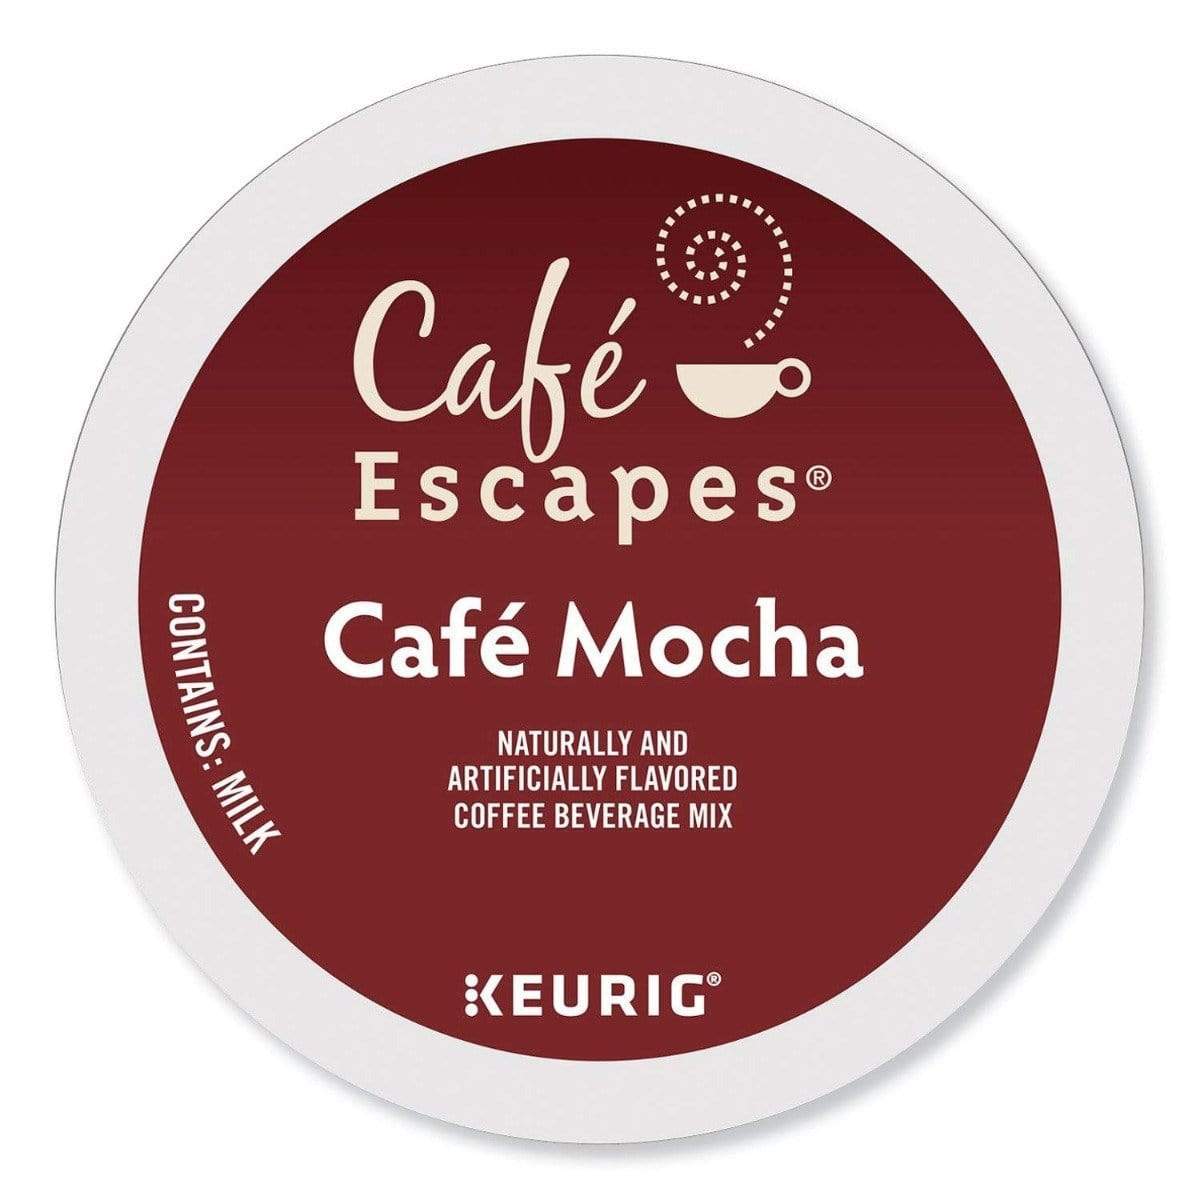 Cafe Esccapes Coffee Café Escapes Café Mocha K-Cup Coffee - 24 Count Box